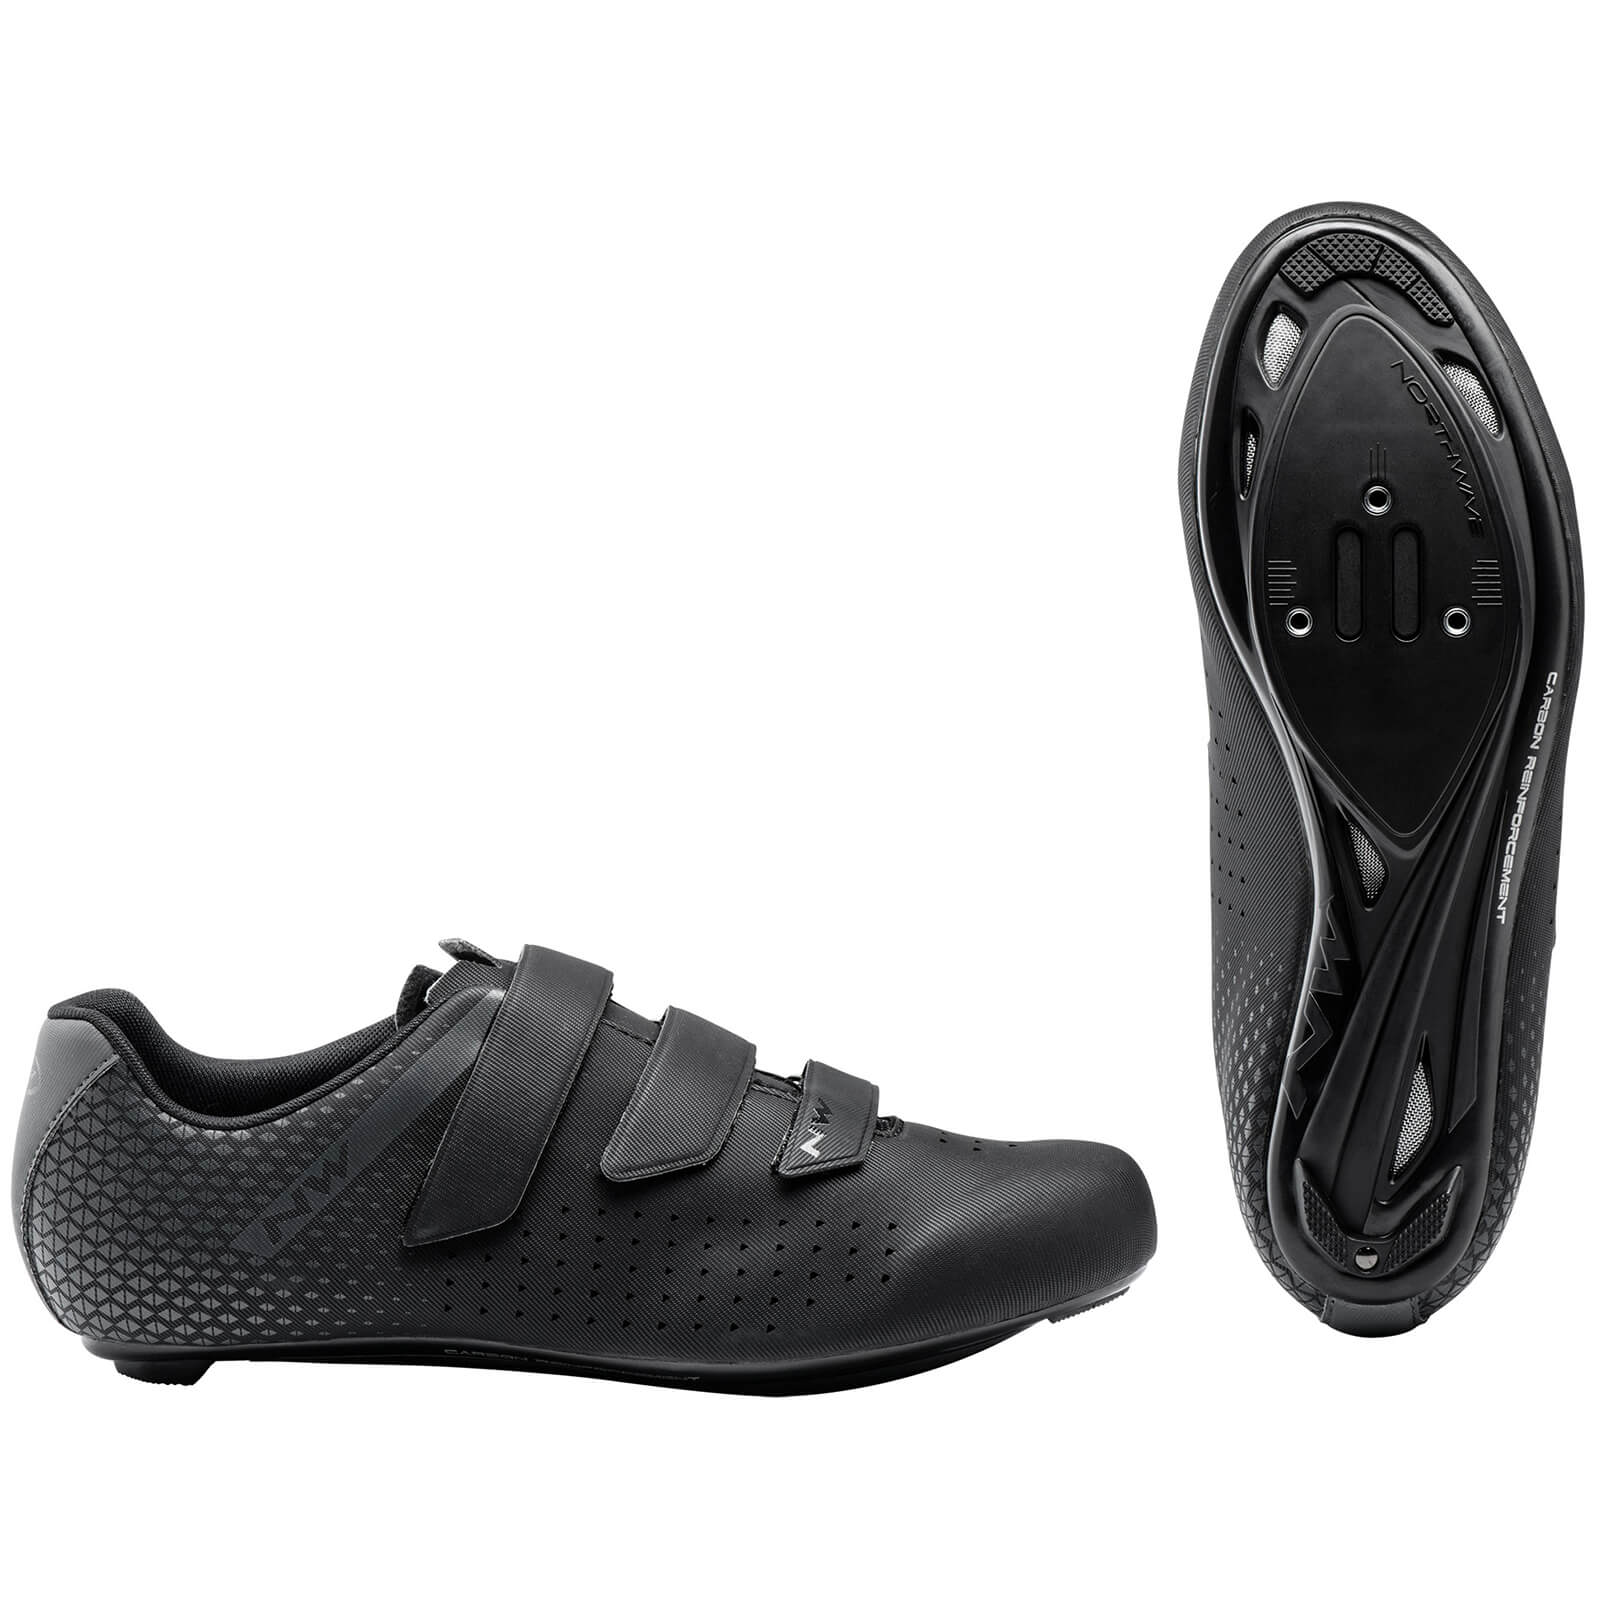 Northwave Core 2 Road Shoes - EU46 - Black/Anthra